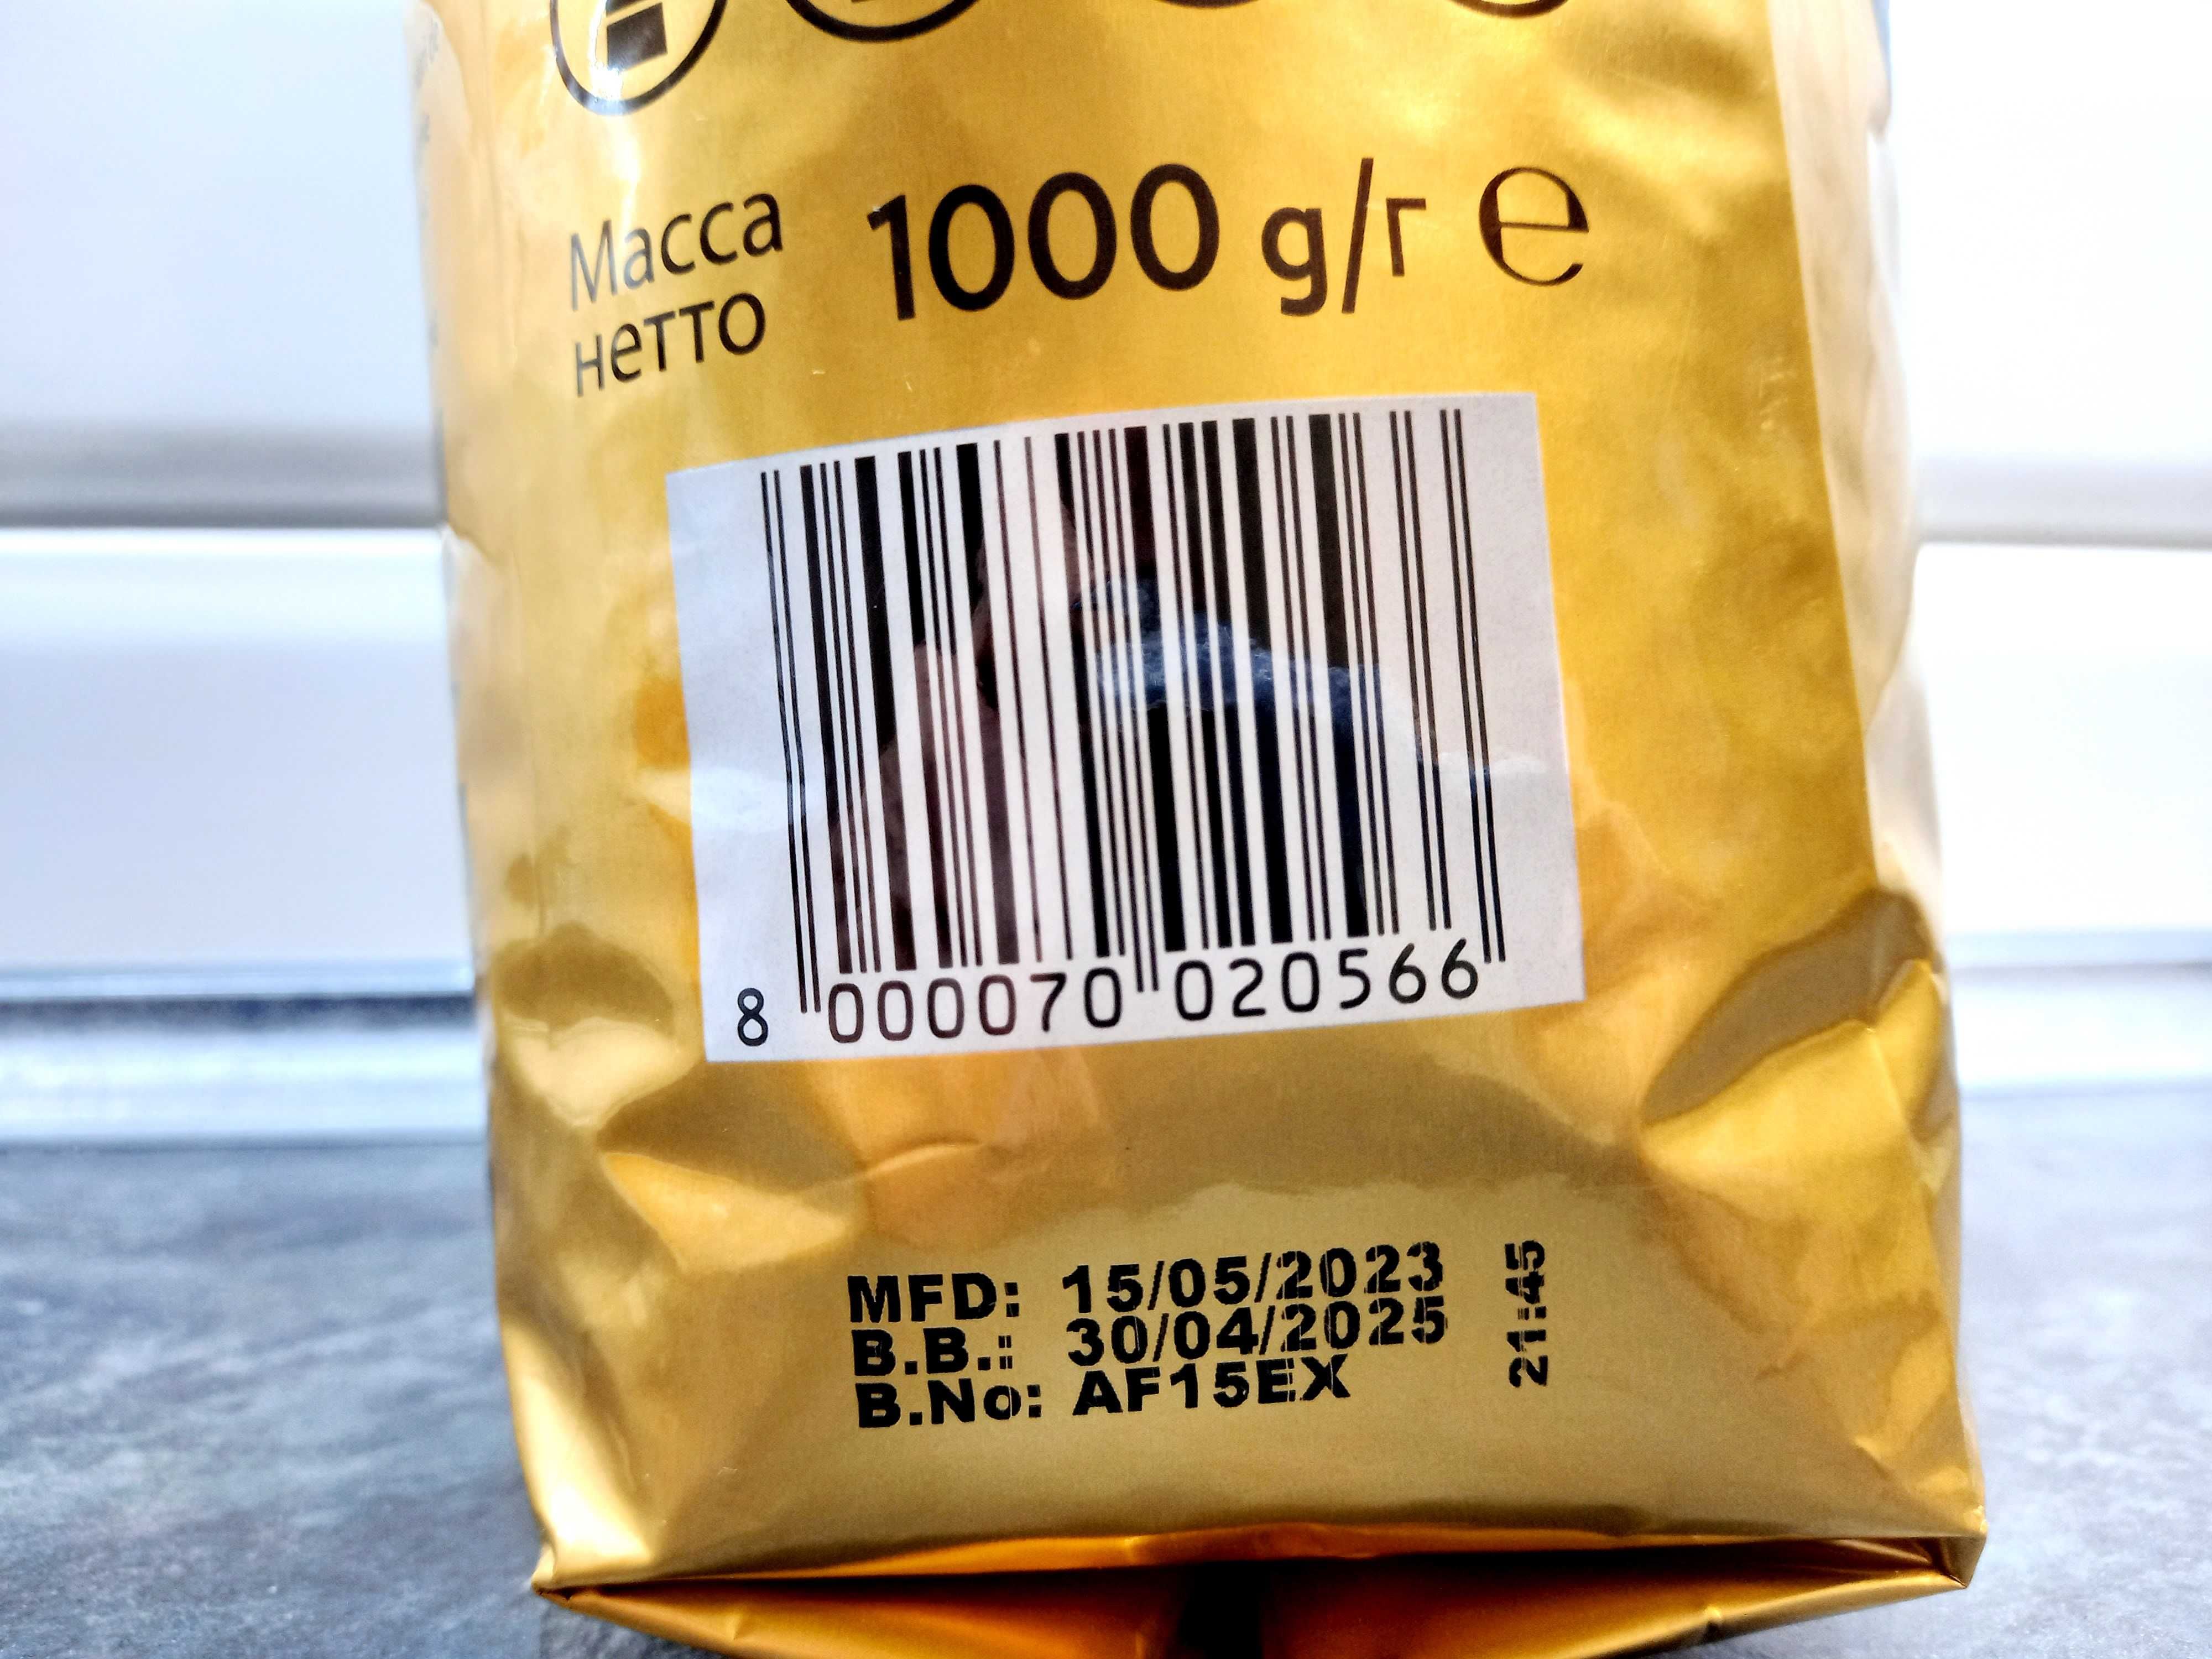 LavAzza, Qualita Oro (1 кг), кофе зерновой 100% арабика